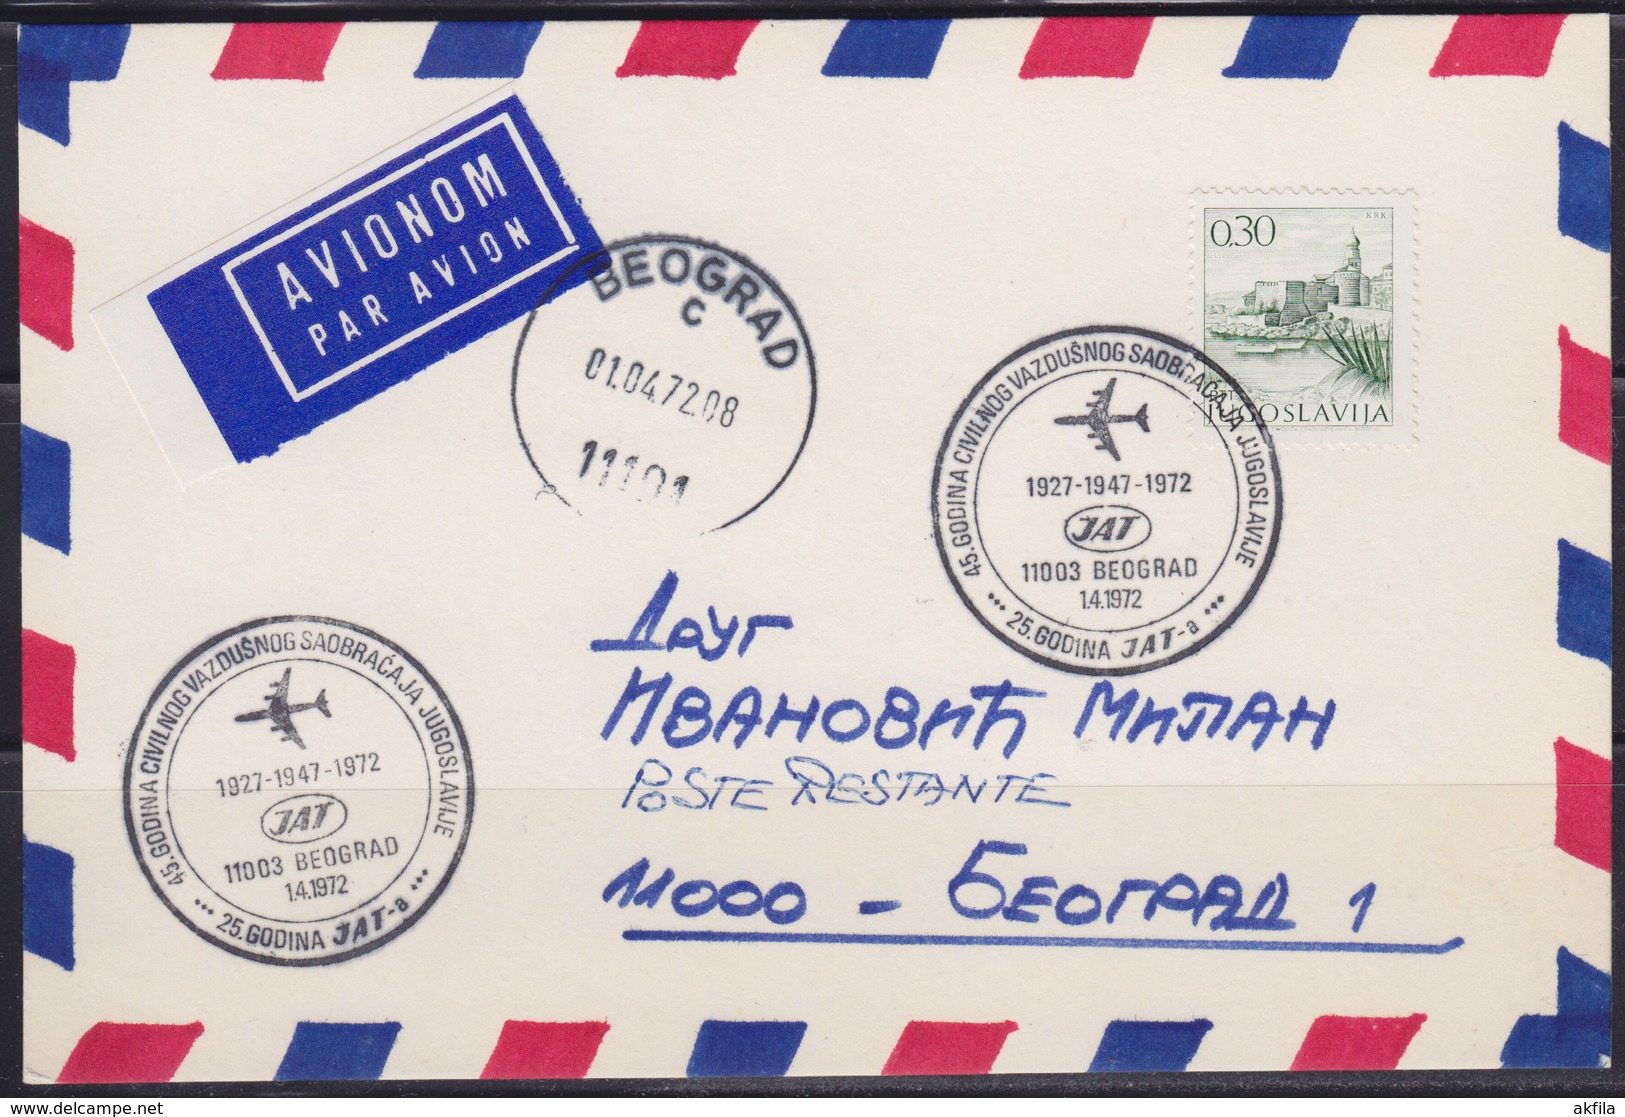 Yugoslavia 1972 Yugoslav Airlines (JAT) - 25th Anniversary, Official Bigger Postmark, Airmail Card - Airmail